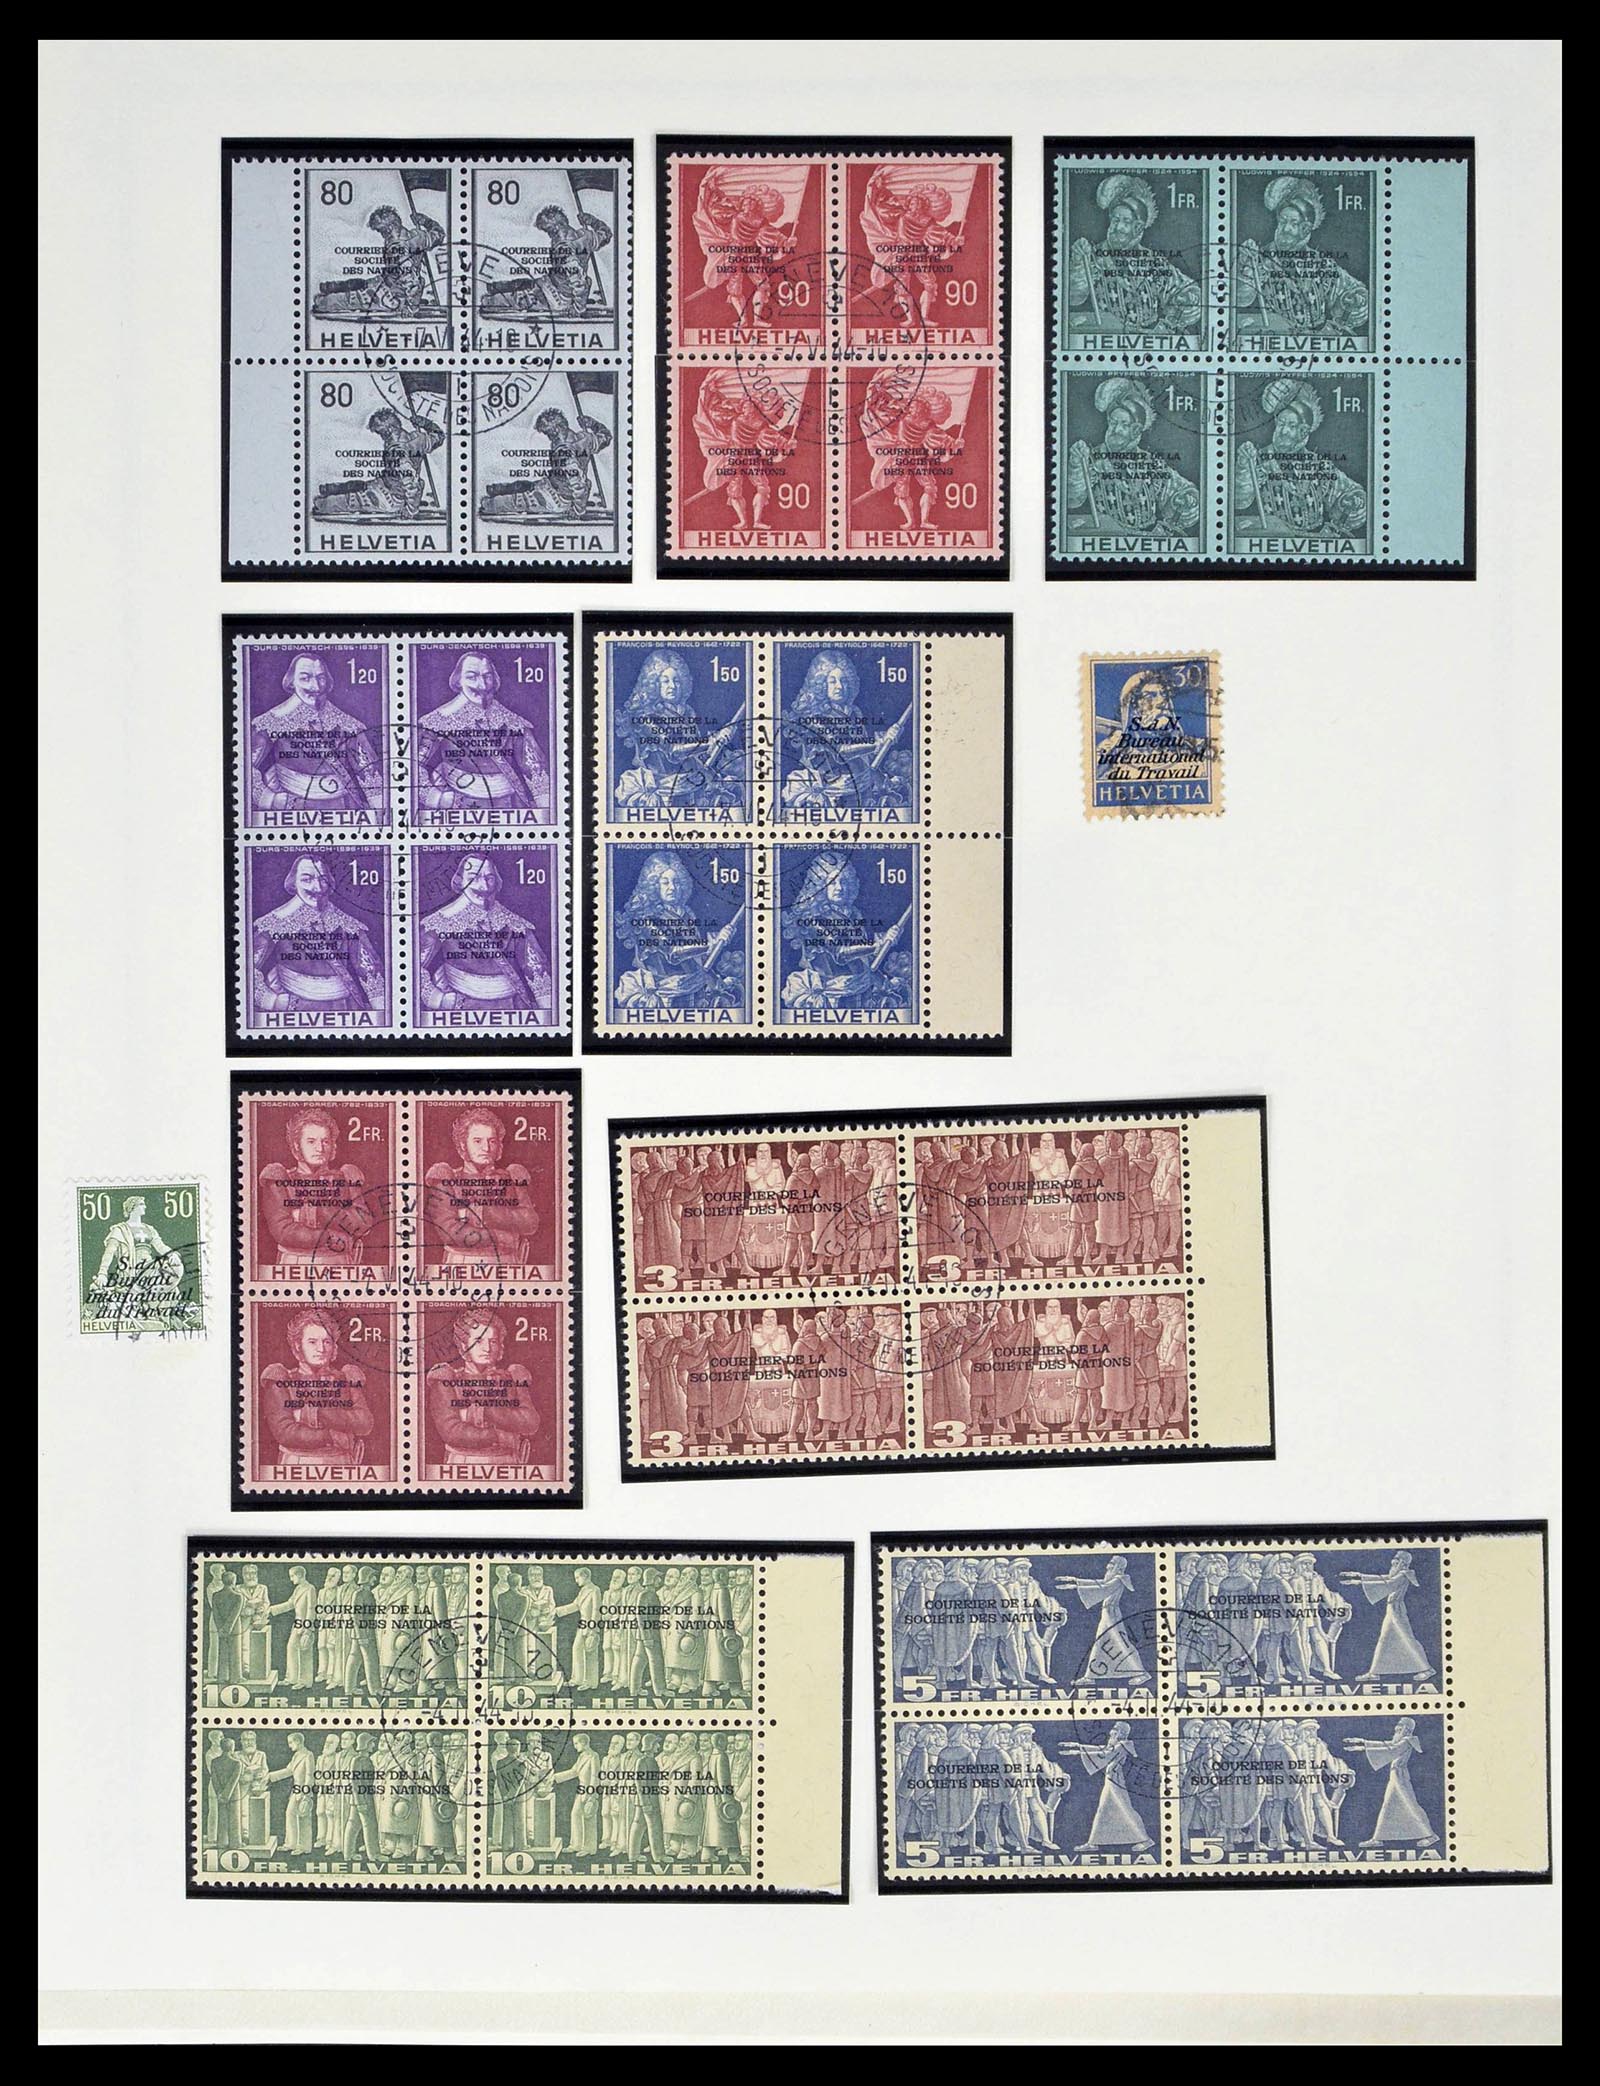 39178 0241 - Stamp collection 39178 Switzerland 1850-1989.